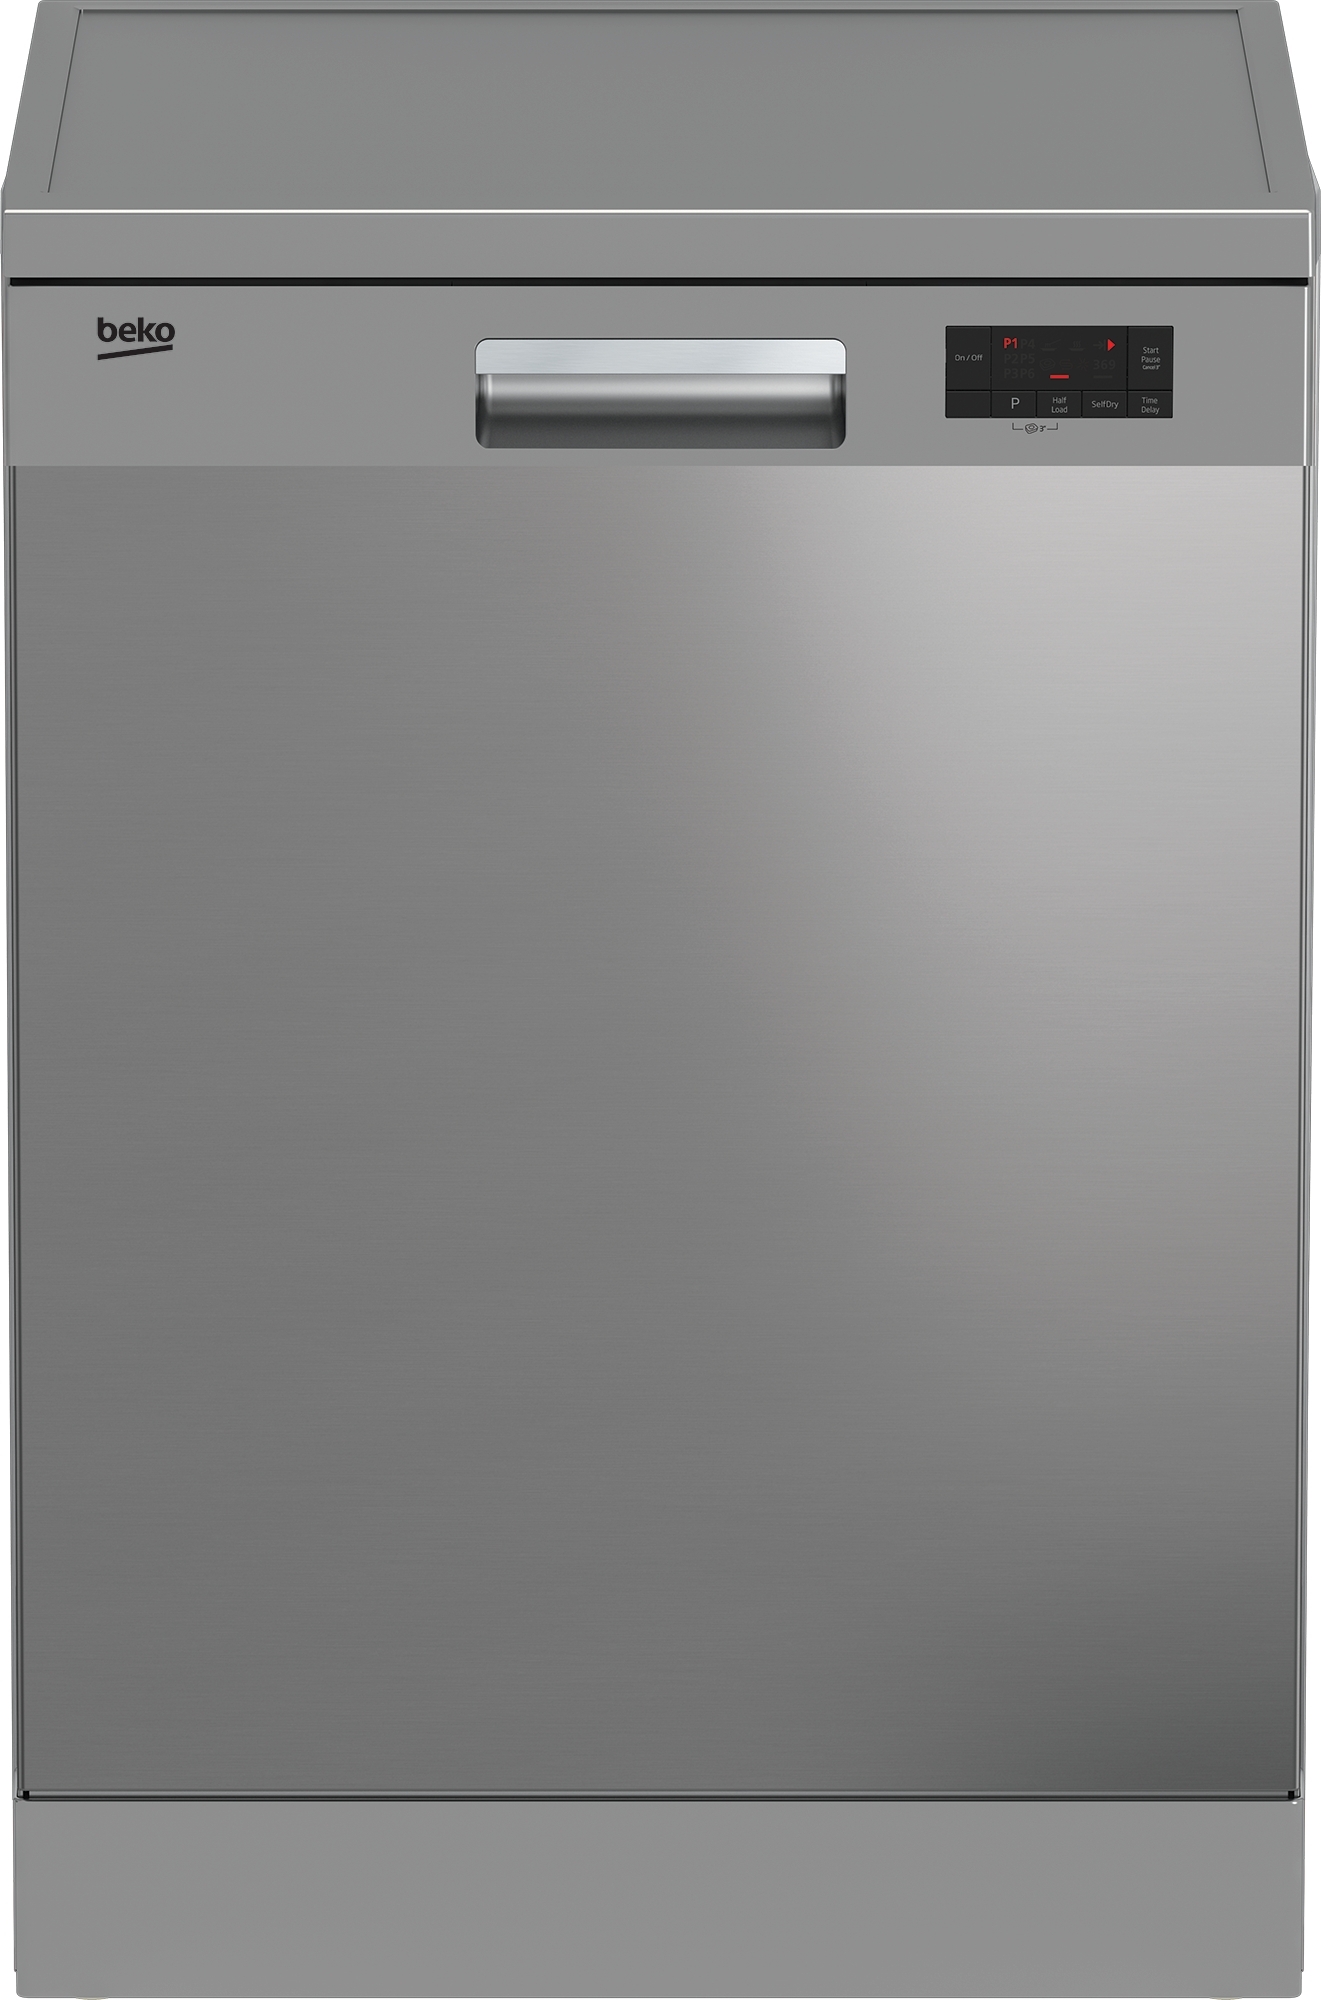 Beko DFN16430X Freestanding 60cm Dishwasher-Stainless Steel